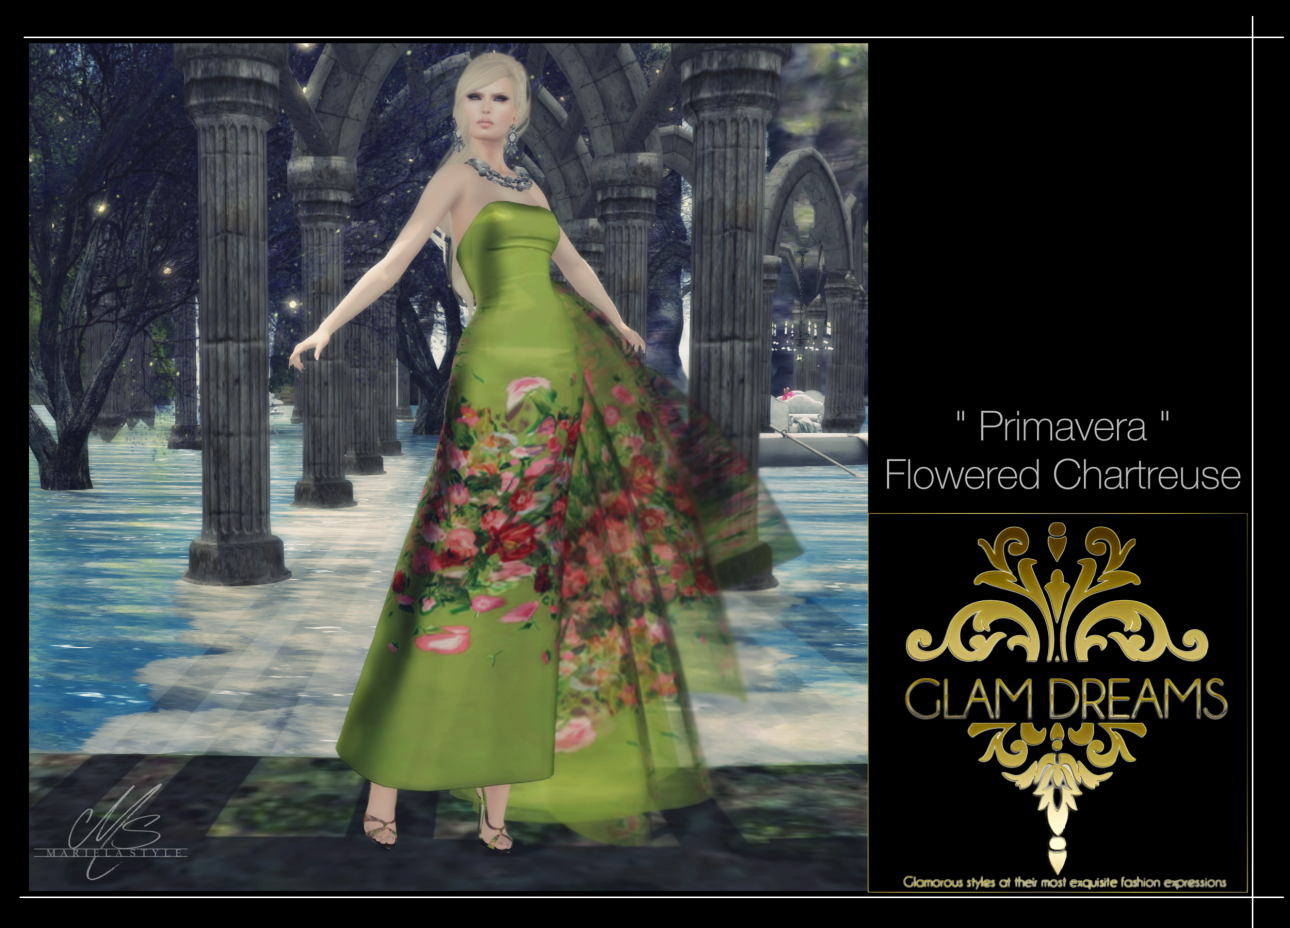 Glam Dreams %22 Primavera %22 Flowered Chartreuse blog